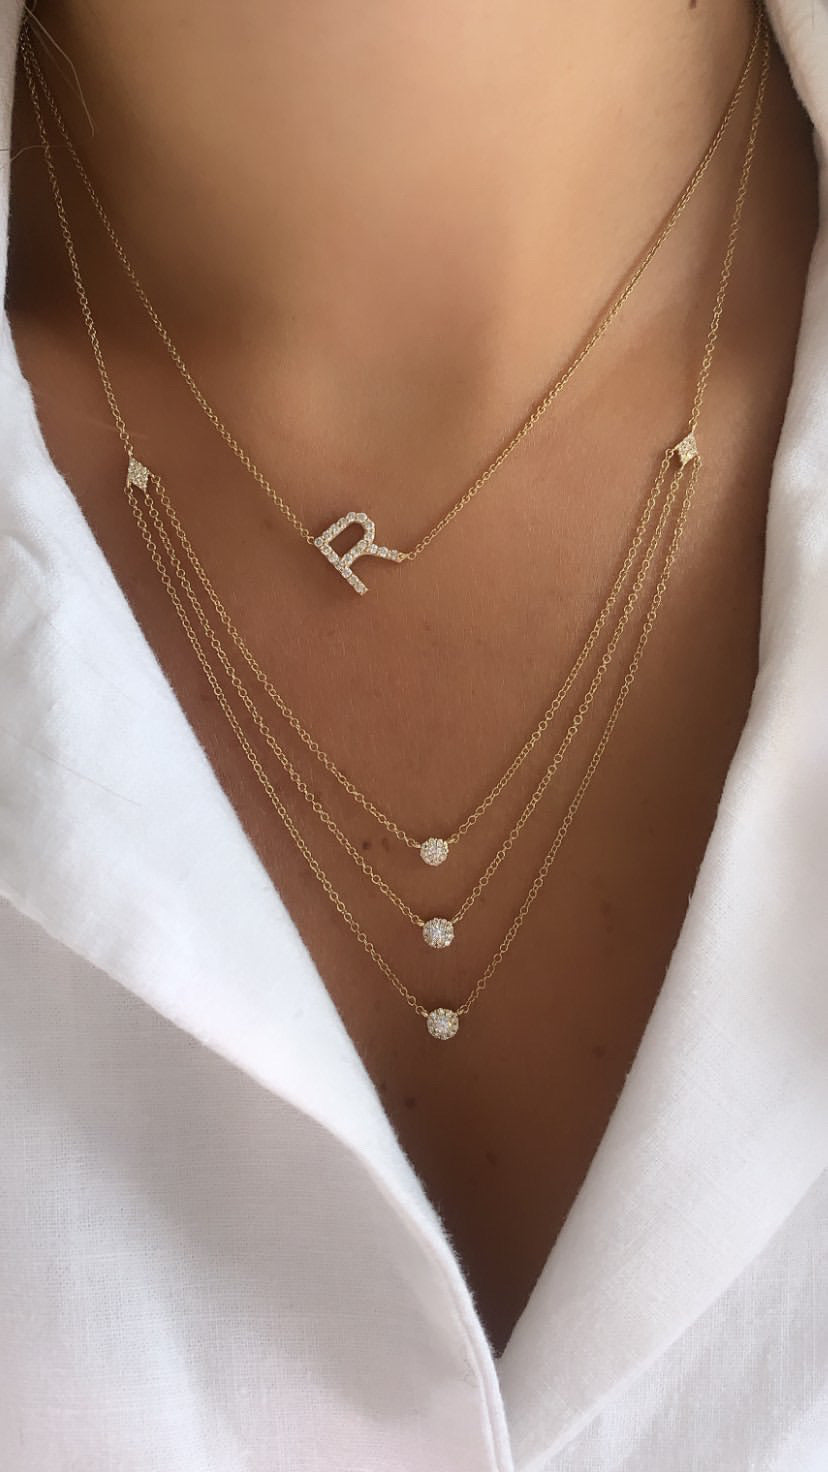 Slanted Diamond Initial Necklace